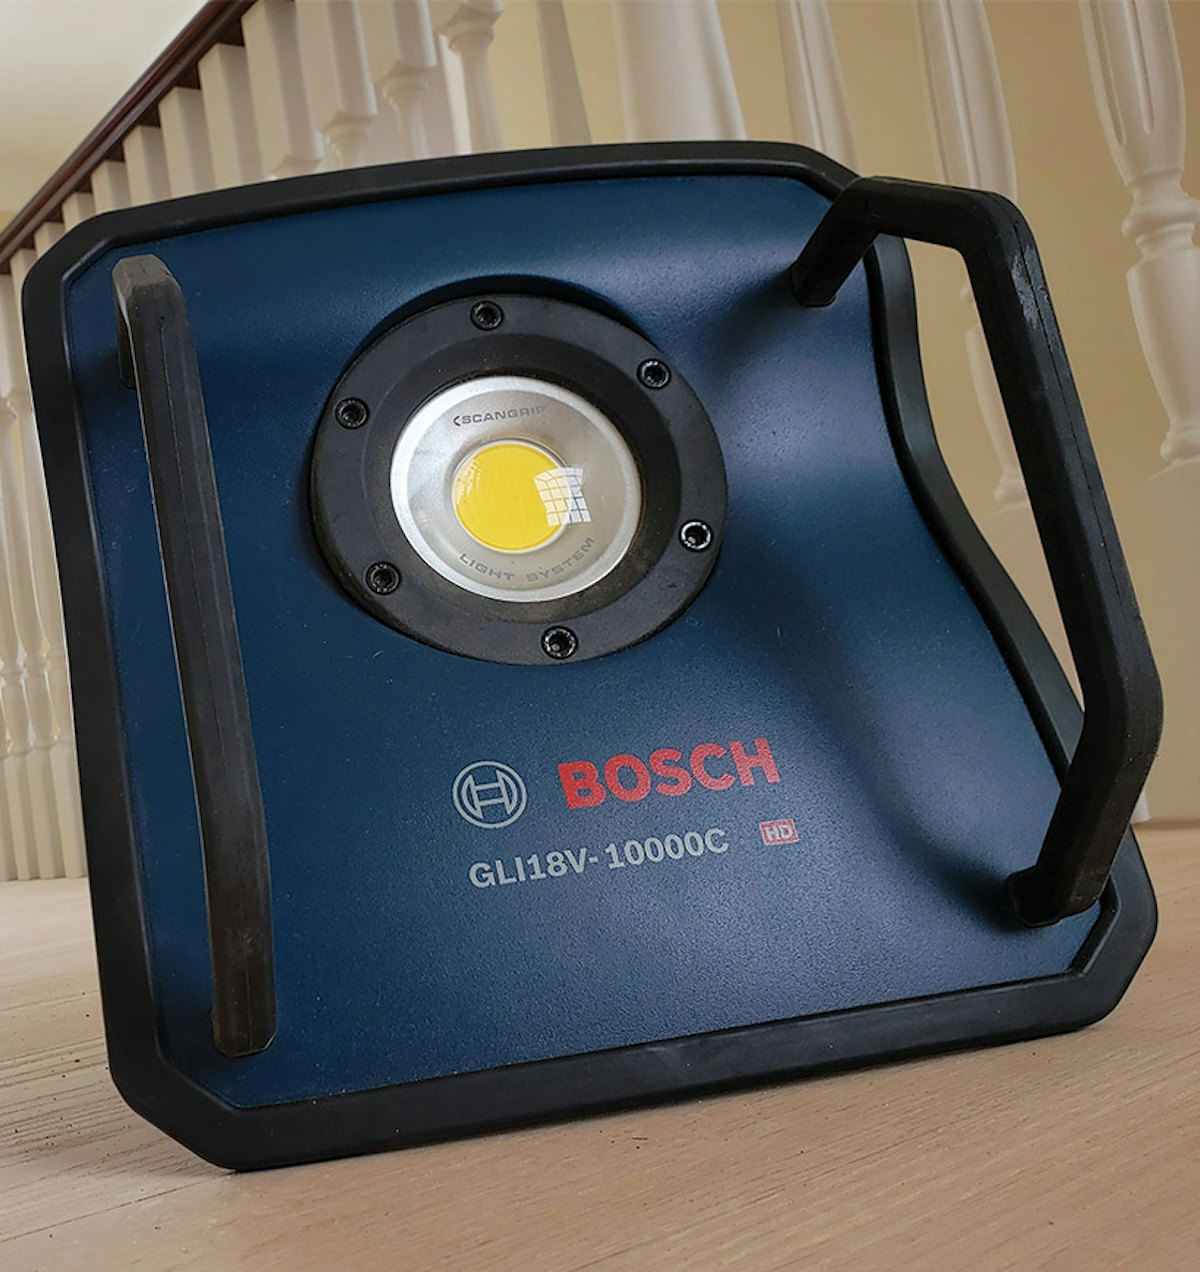 Tool Review: Wood Business Cordless Bosch Floodlight | Floor GLI-18V-10000C